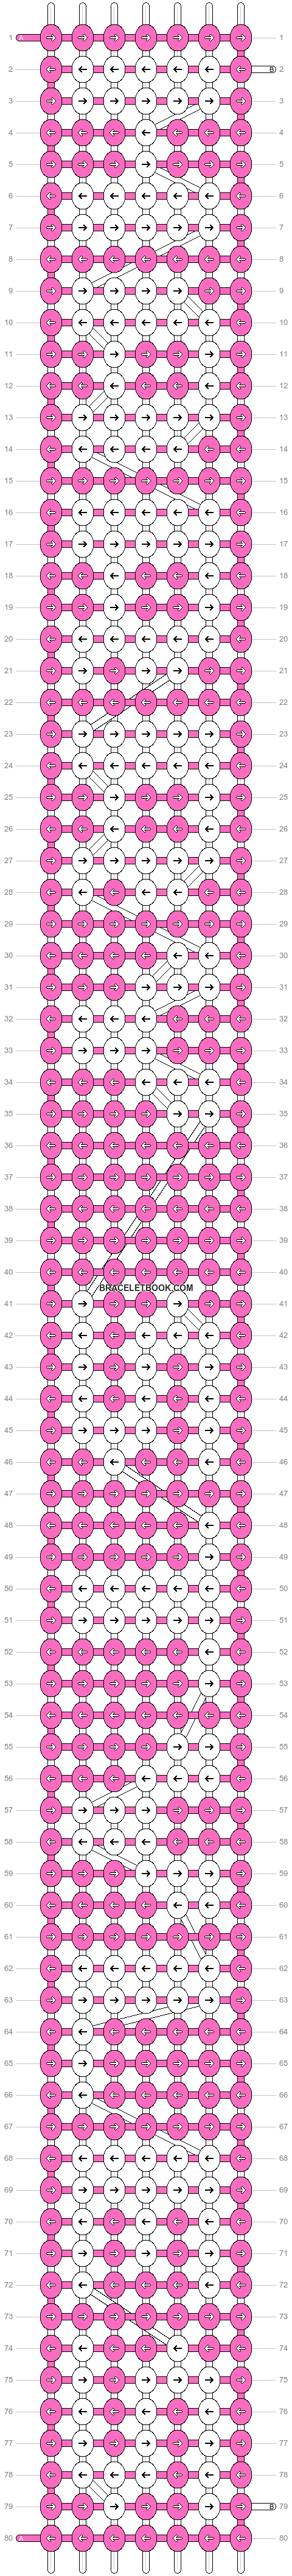 Alpha pattern #5574 variation #48569 pattern